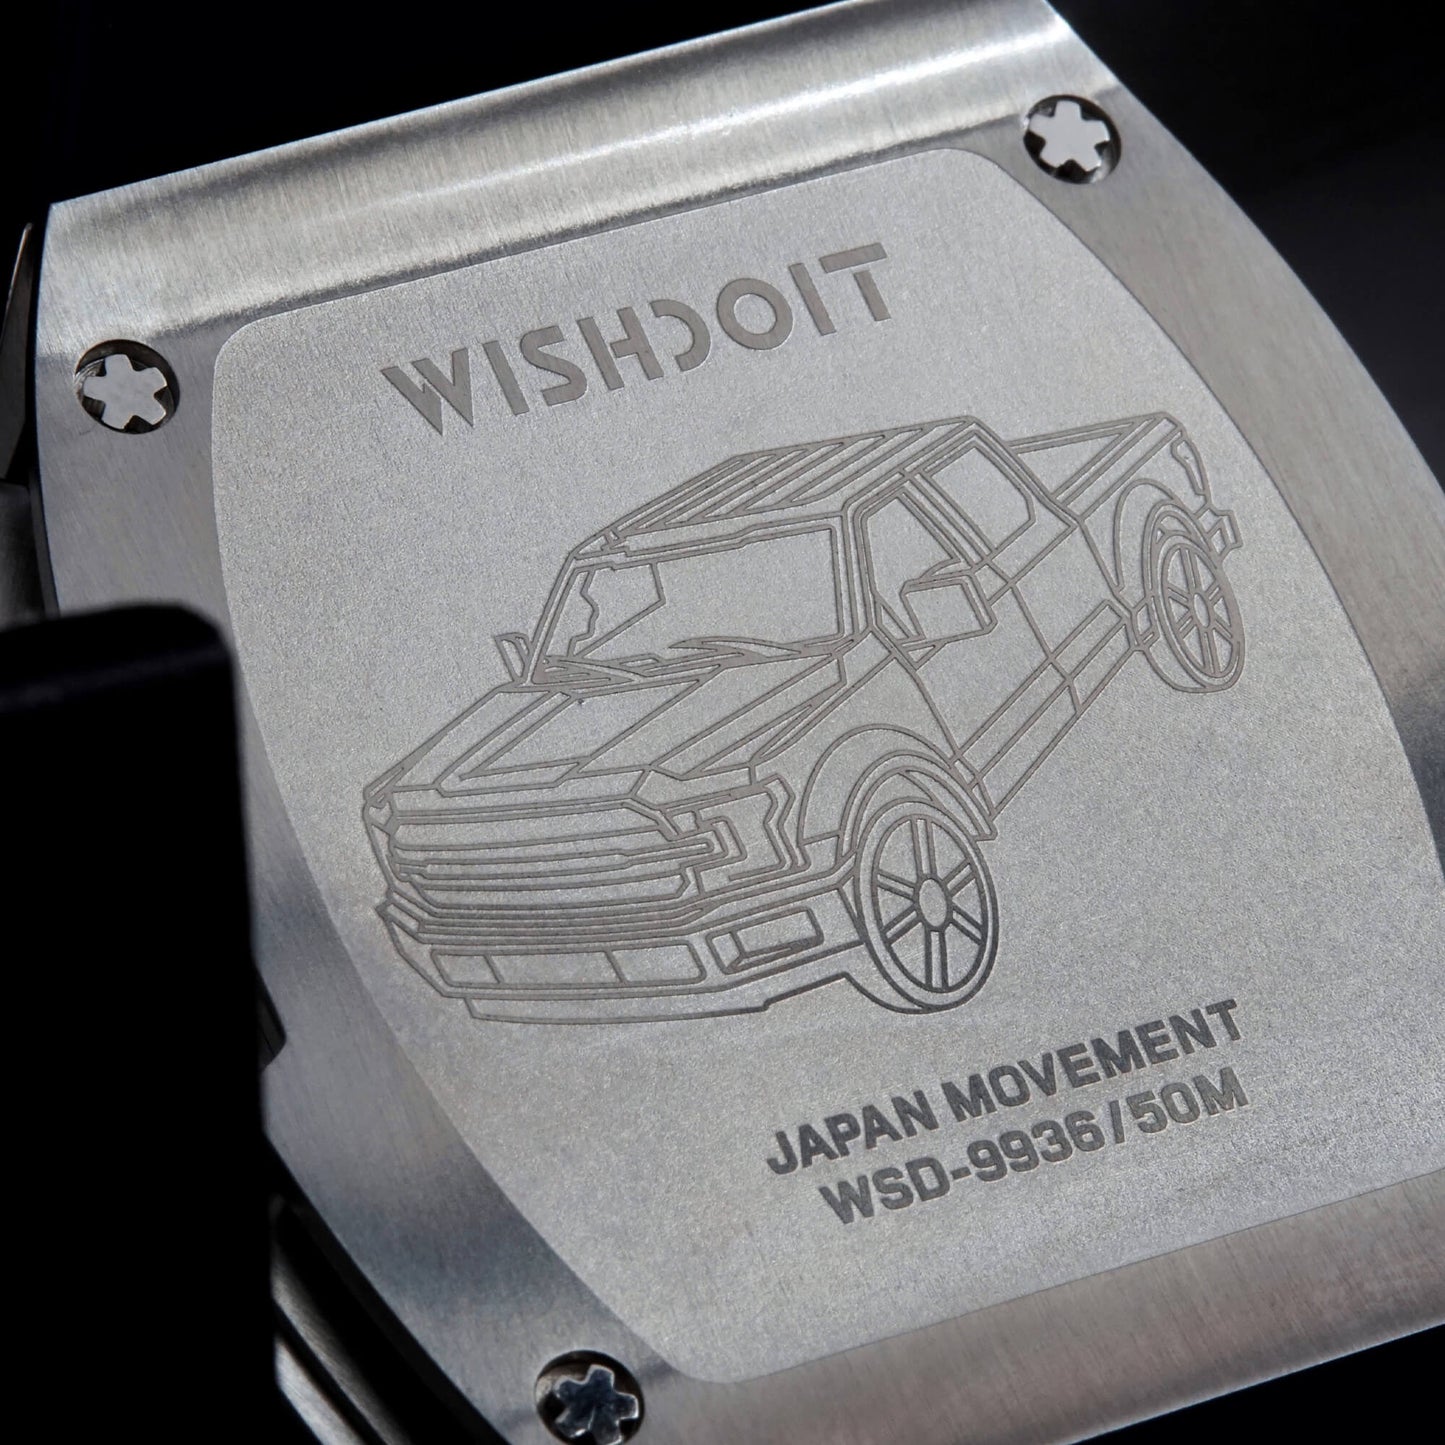 Shop Racing F-150 Series Chronograph Quartz Silver White Watch | Wishdoit